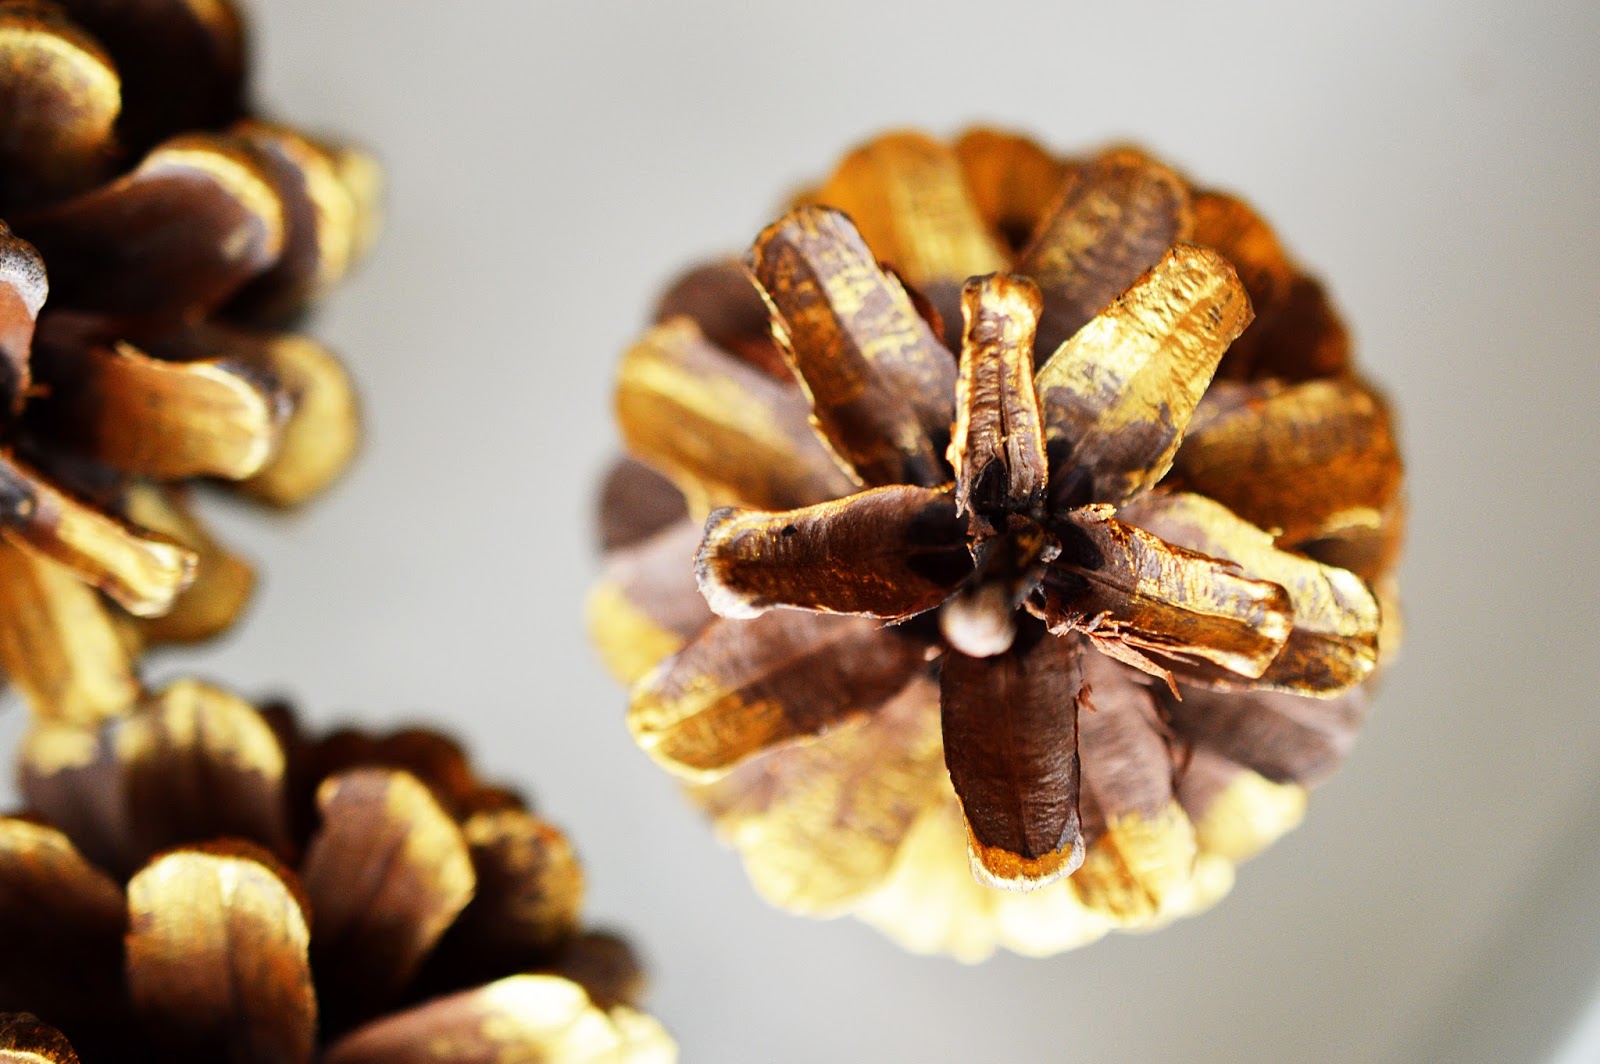 DIY Festive Pine Cone Garland| Motte's Blog